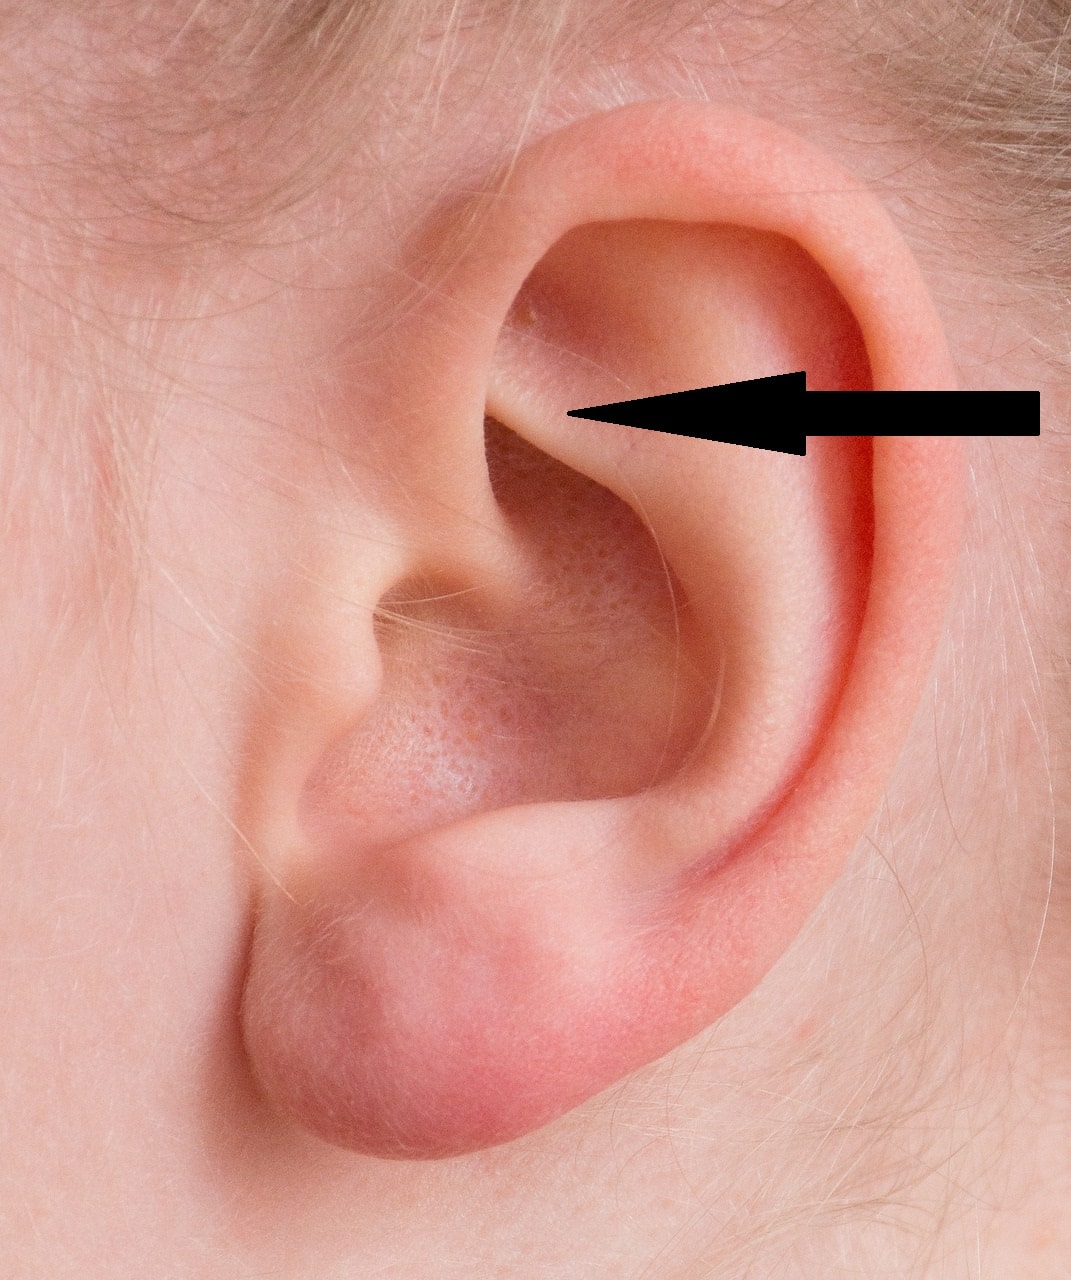 Rook piercing location on ear